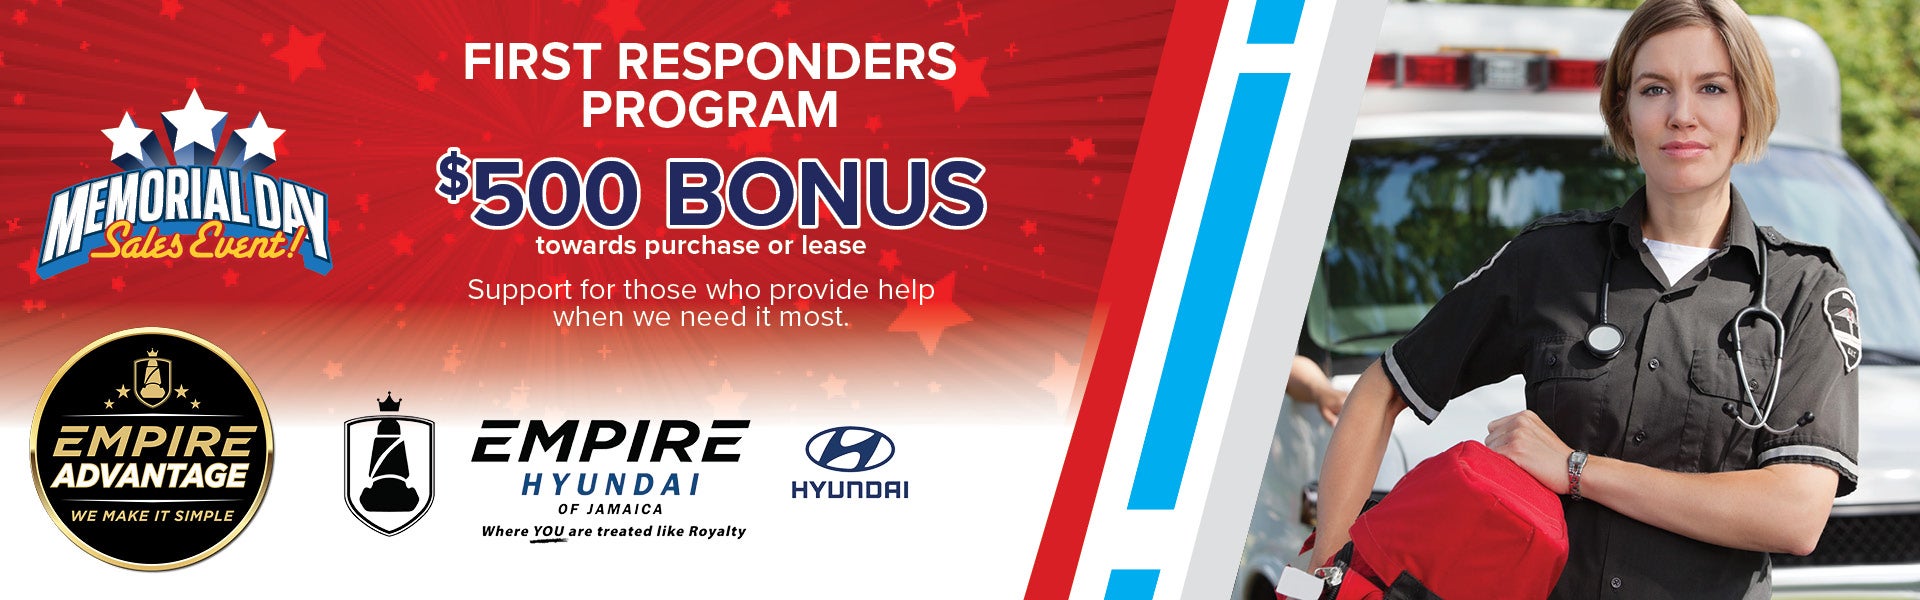 First Responders Program $500 Bonus